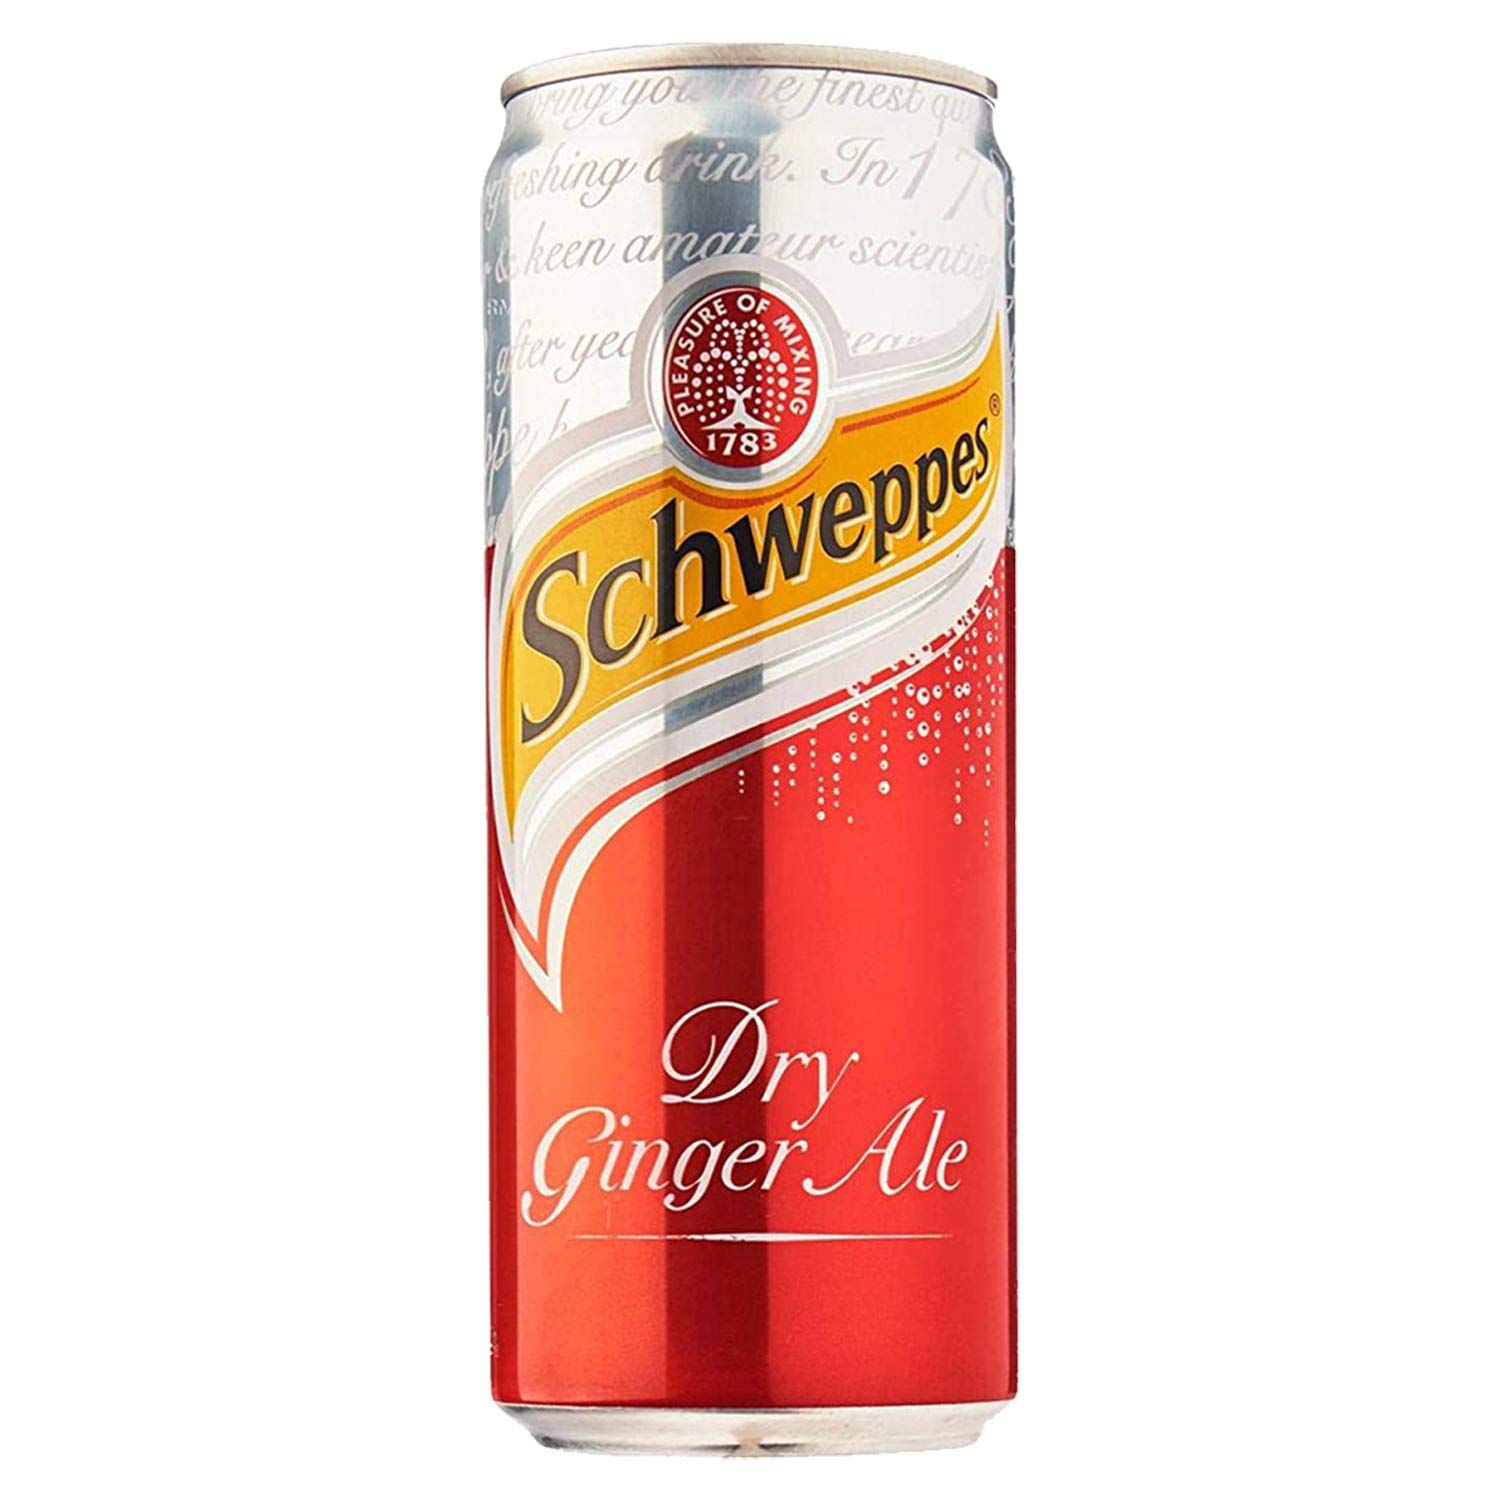 Schweppes Dry Ginger Ale Image